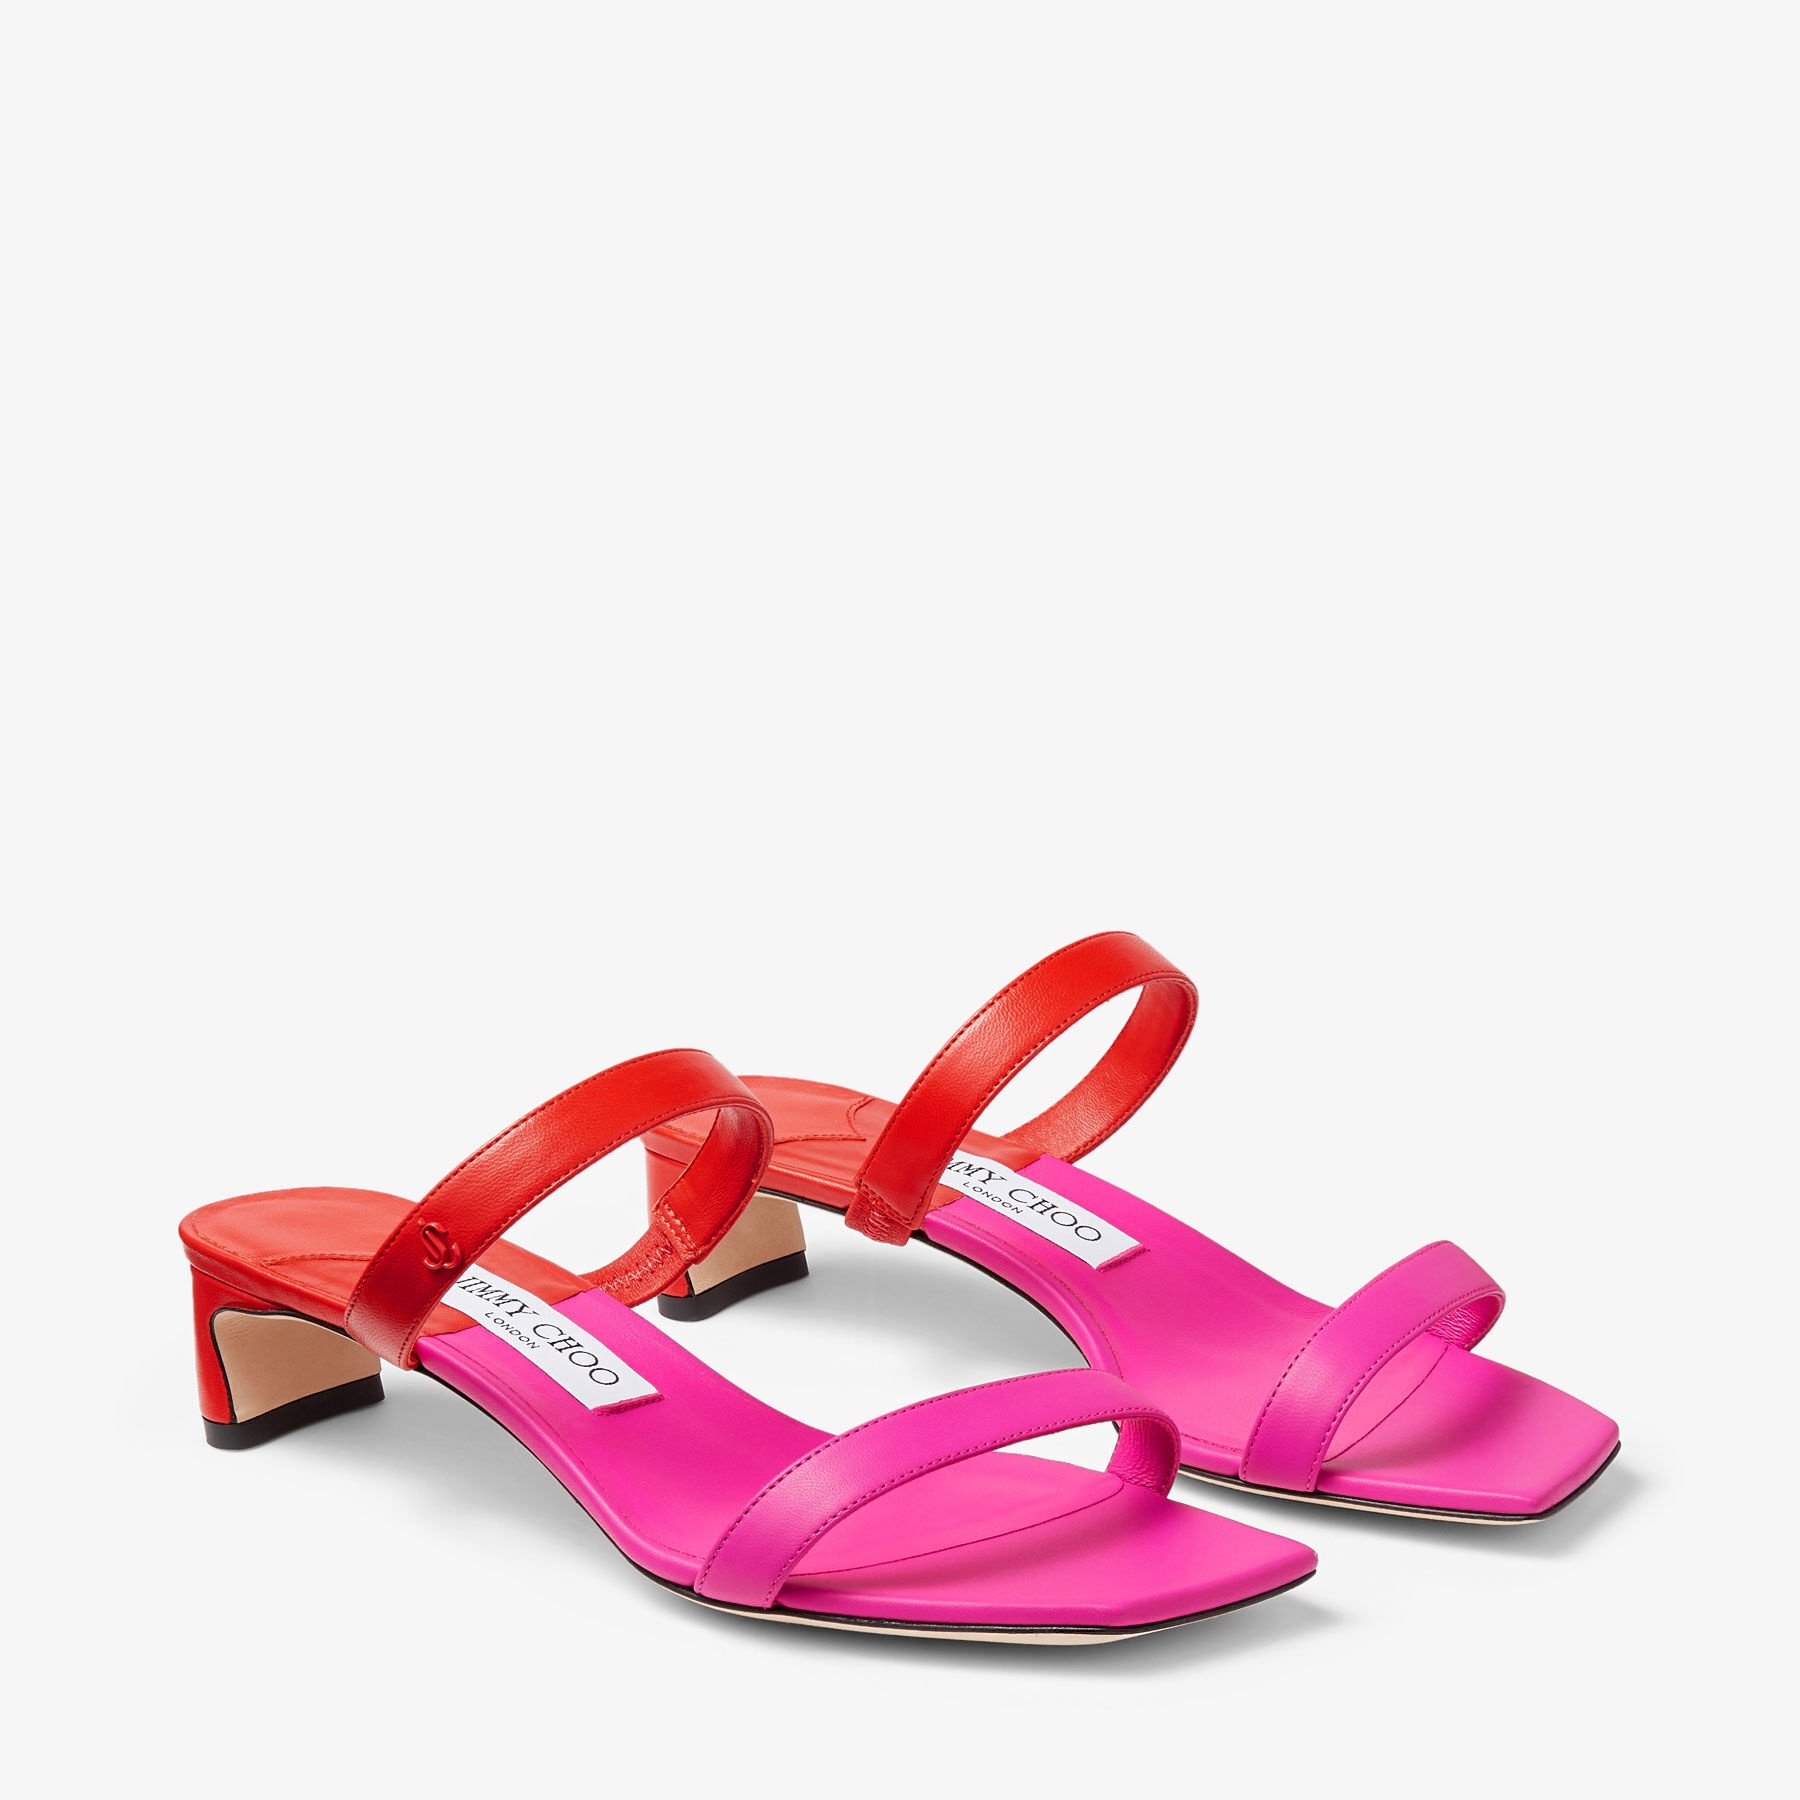 Kyda 35
Fuchsia and Pink Nappa Leather Sandals - 2